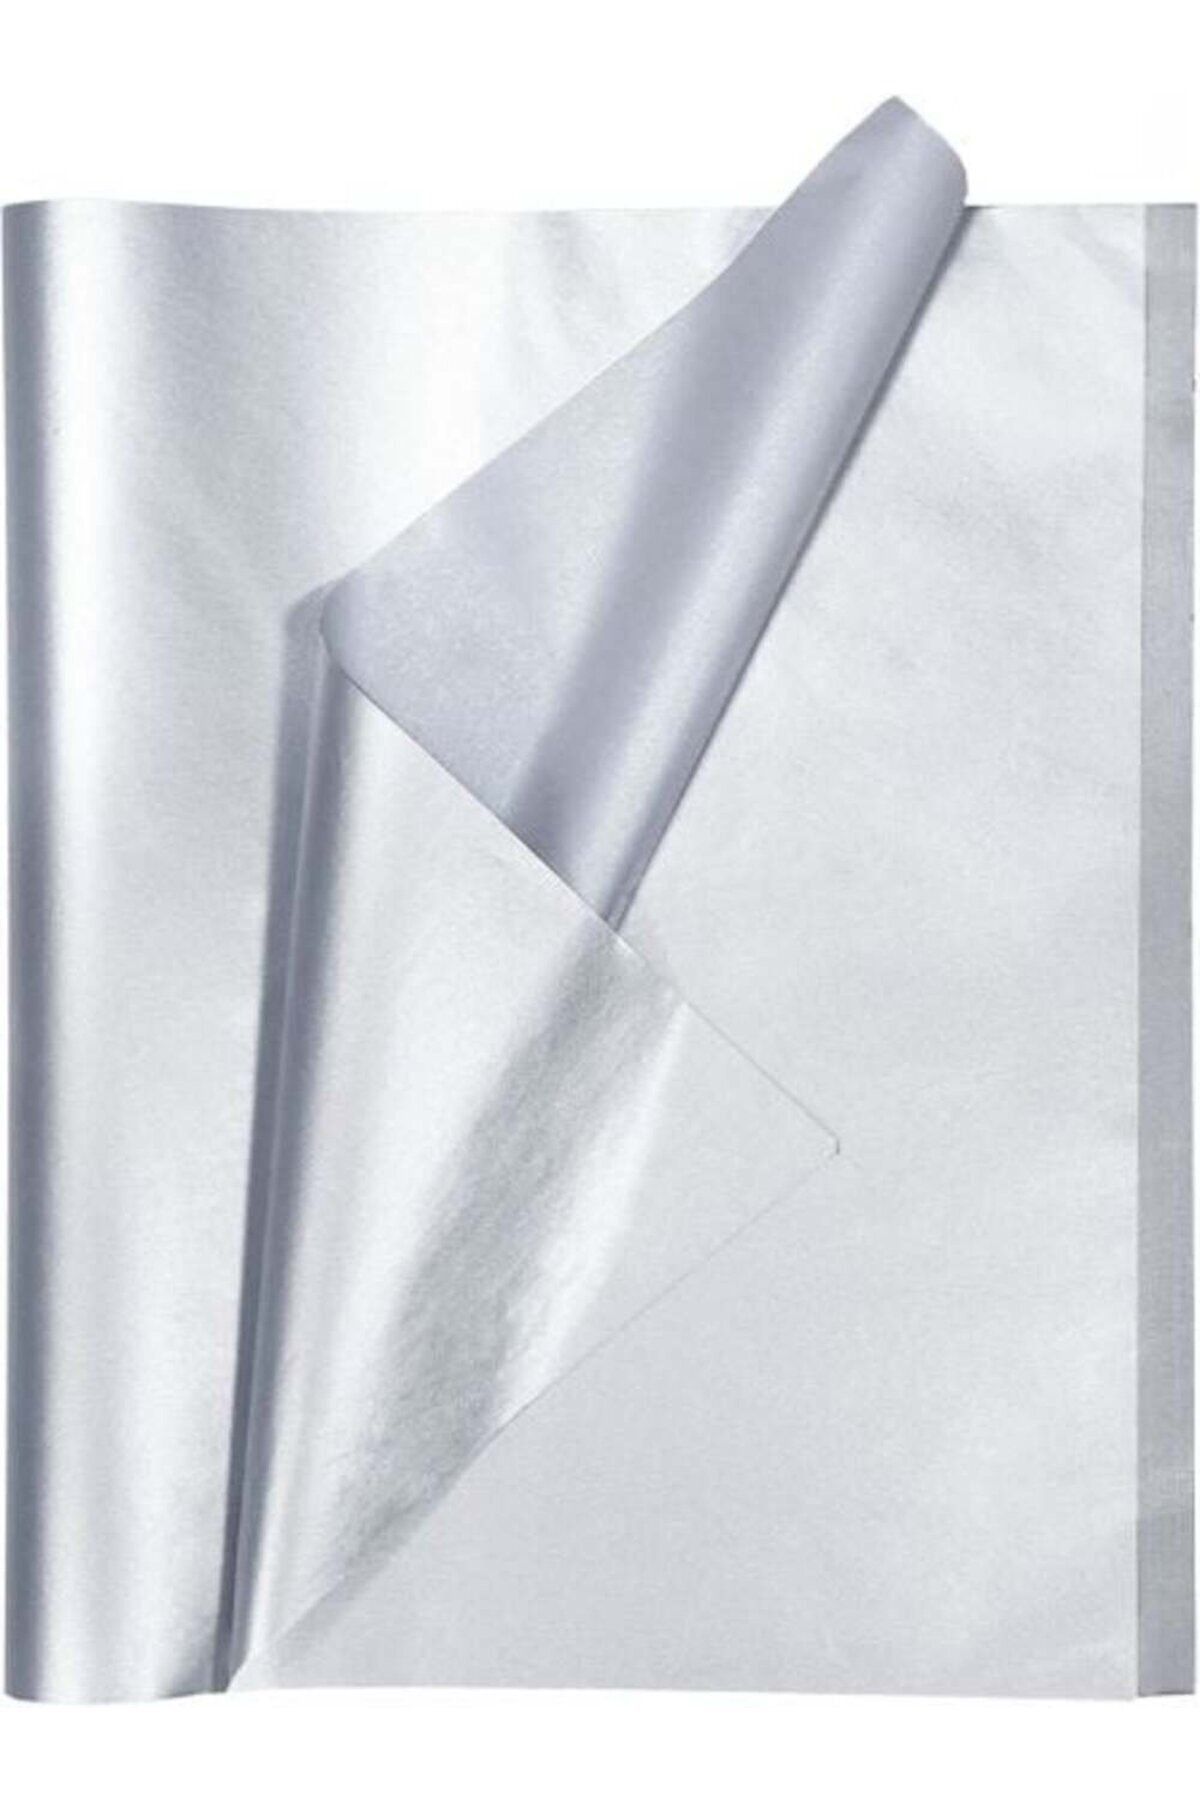 roco paper Pelur Kağıt 17 gr/m. & 50*70 cm - 15'li Paket Gümüş Renk